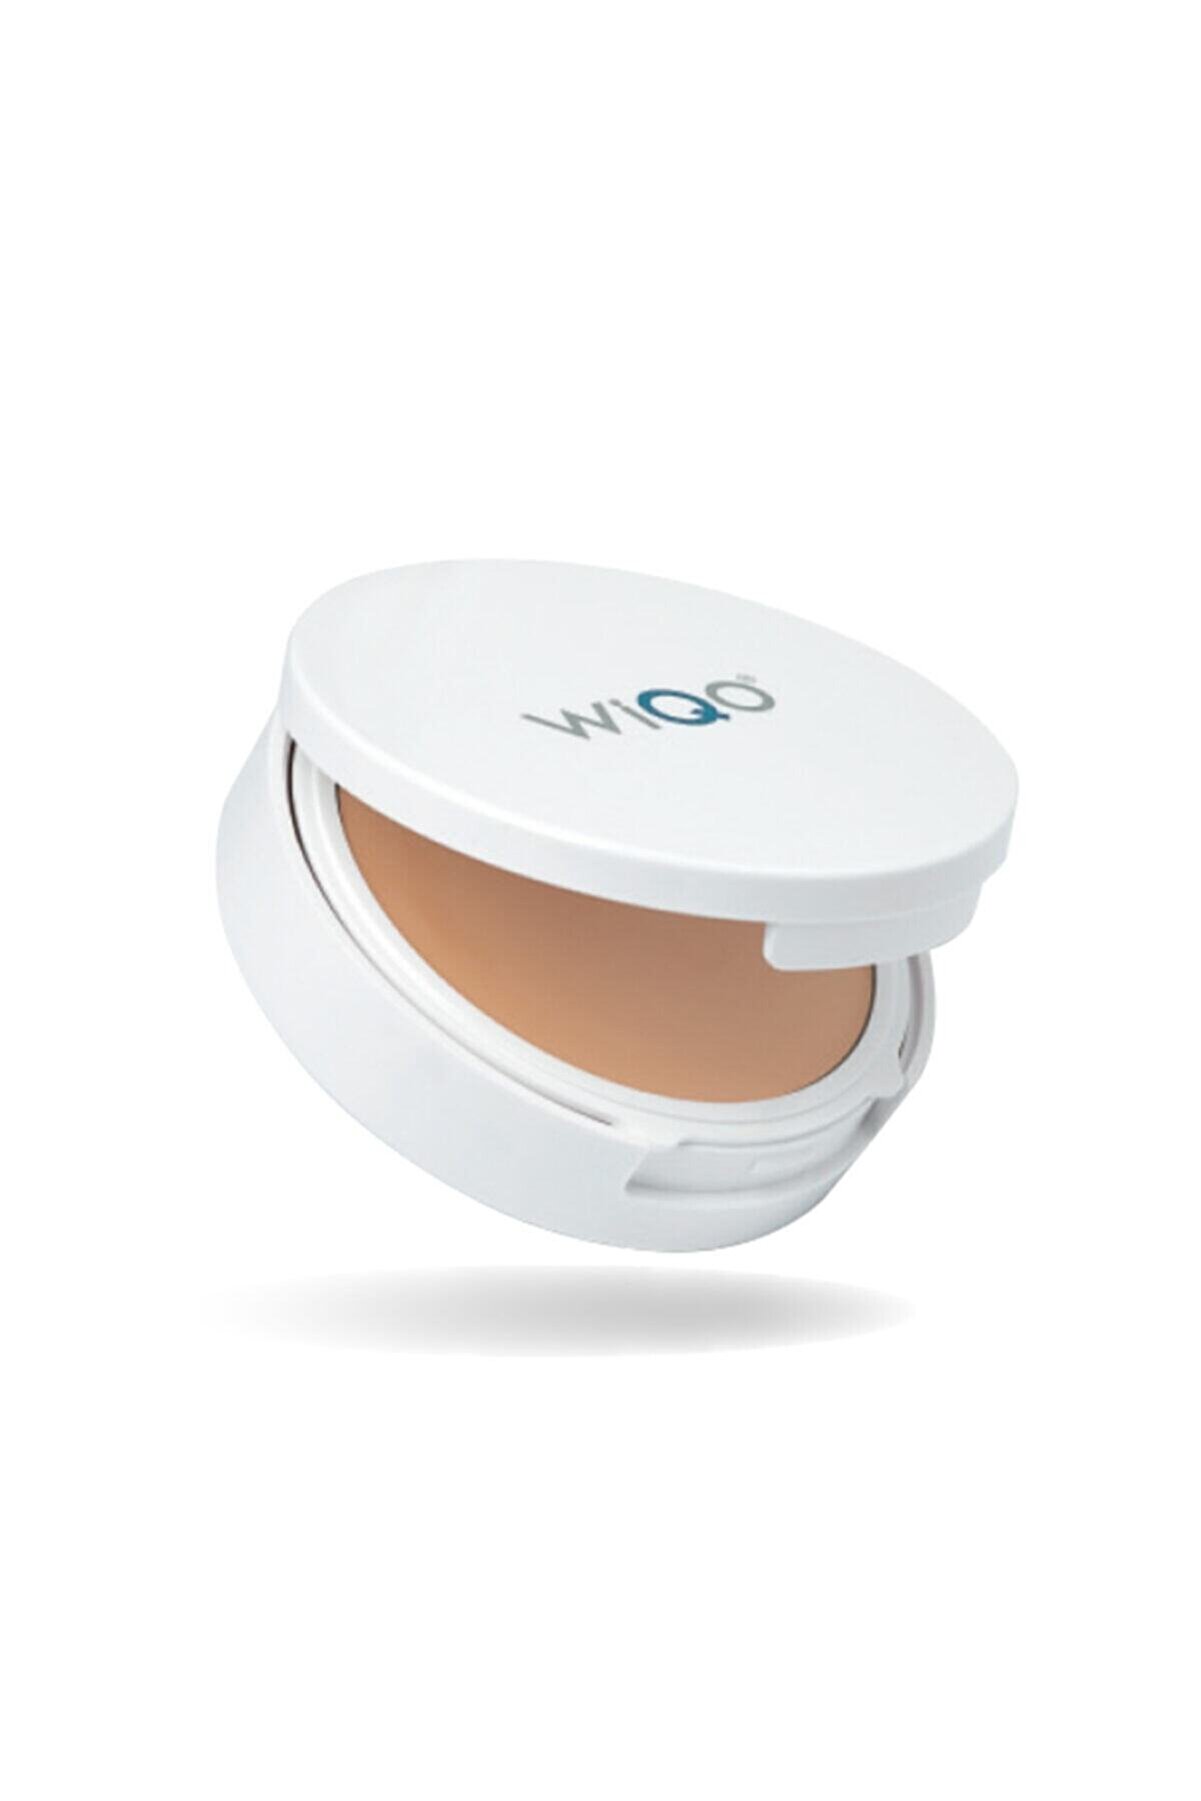 Wiqo Icp Compact Görülmeyen Renkli Kapatıcı, Spf 50 ( Lıght )